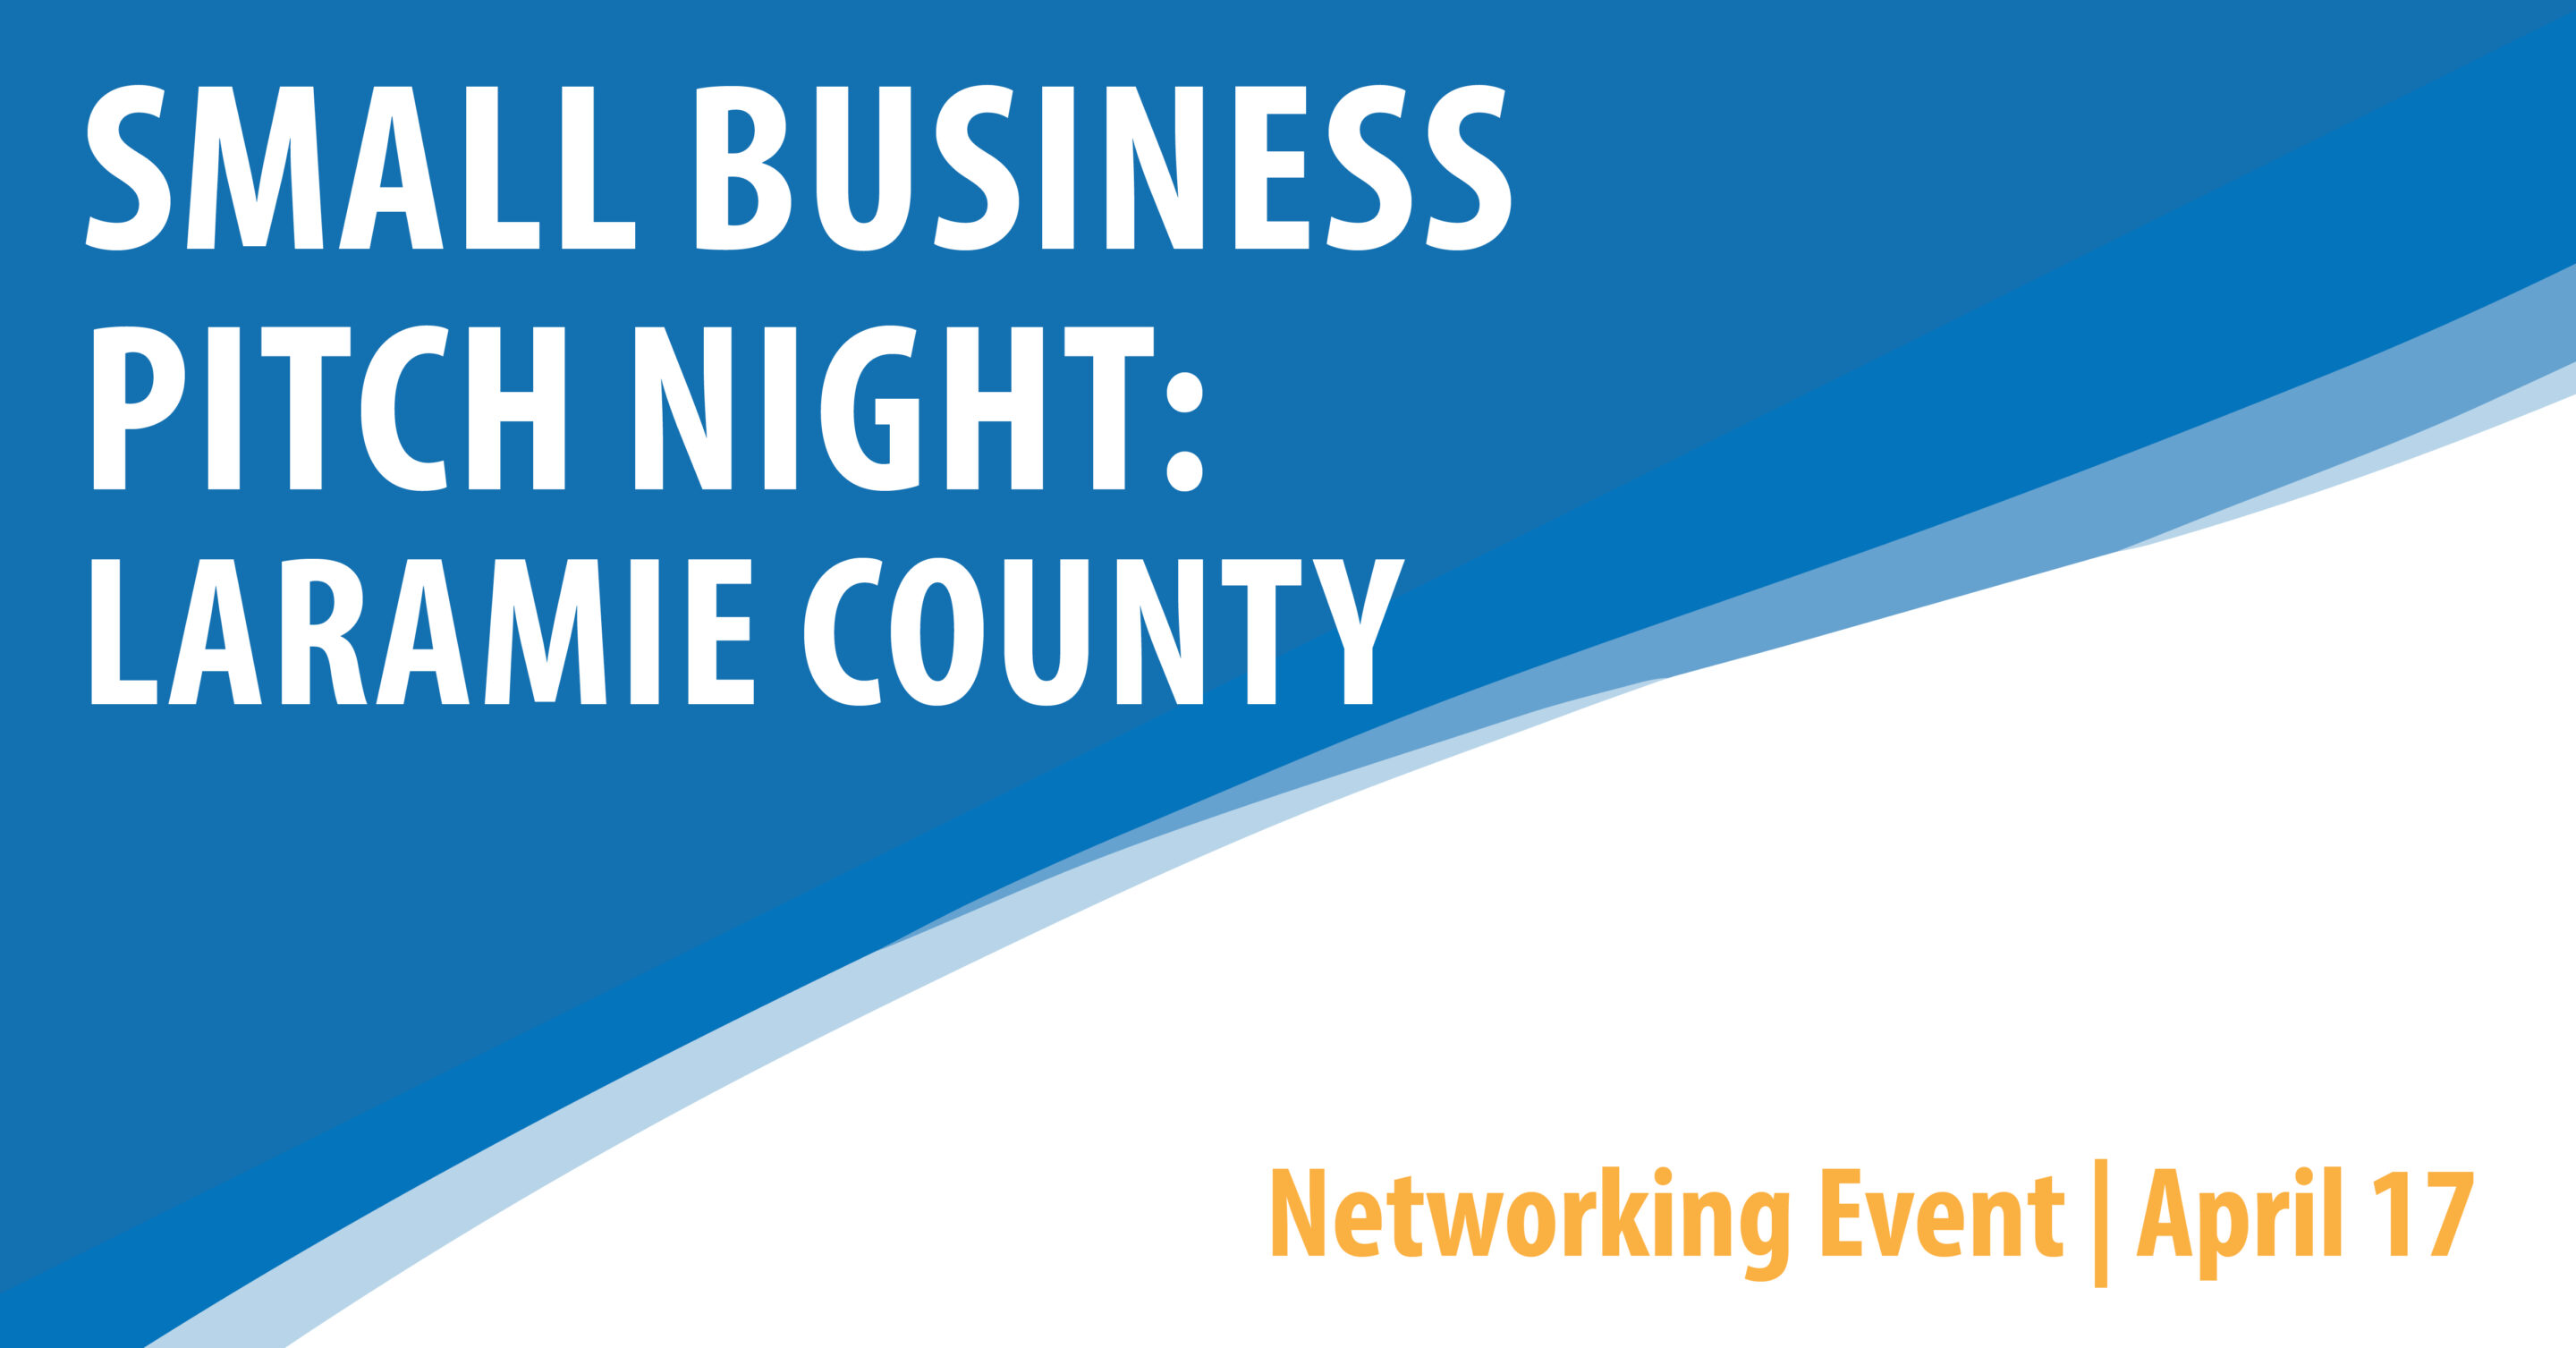 Small Business Pitch Night - Laramie County